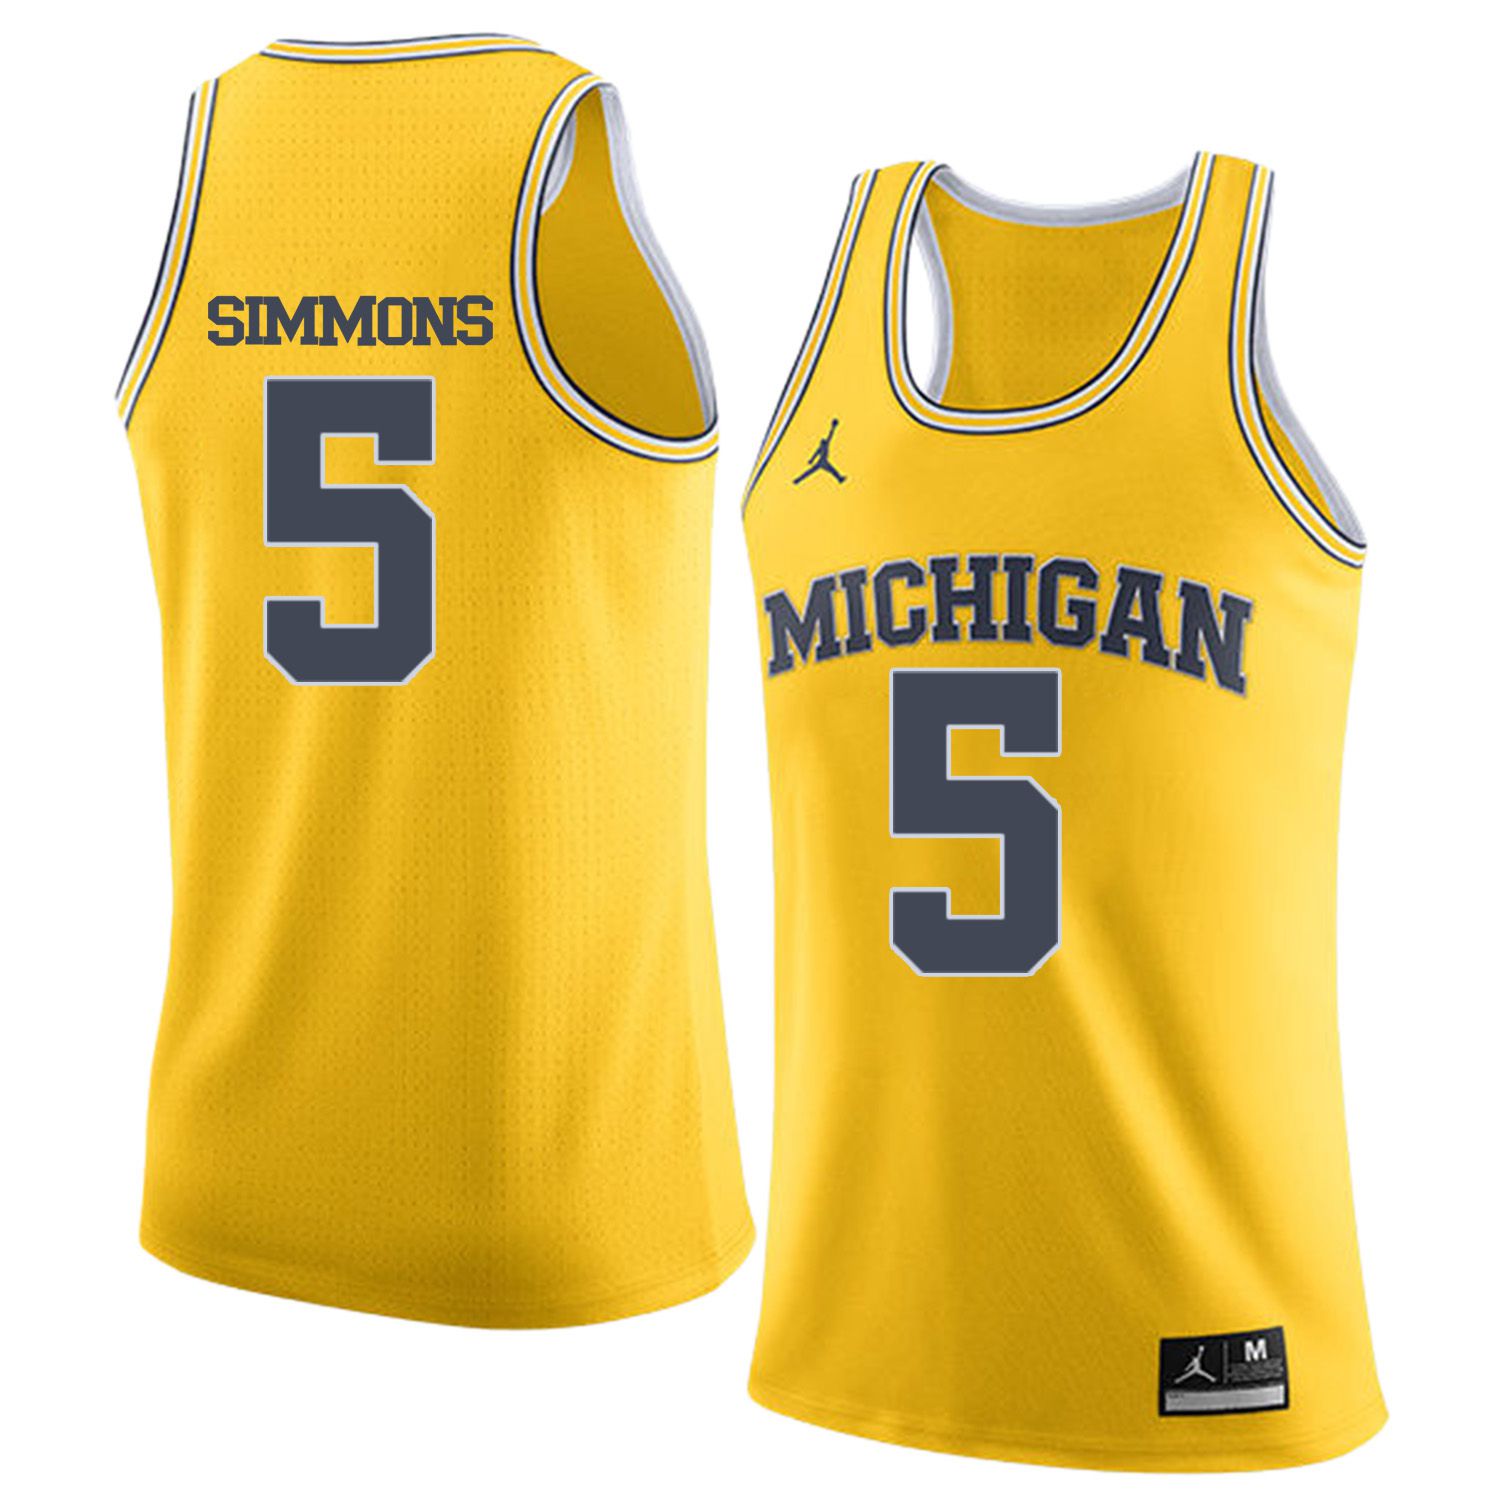 Men Jordan University of Michigan Basketball Yellow 5 Simmons Customized NCAA Jerseys